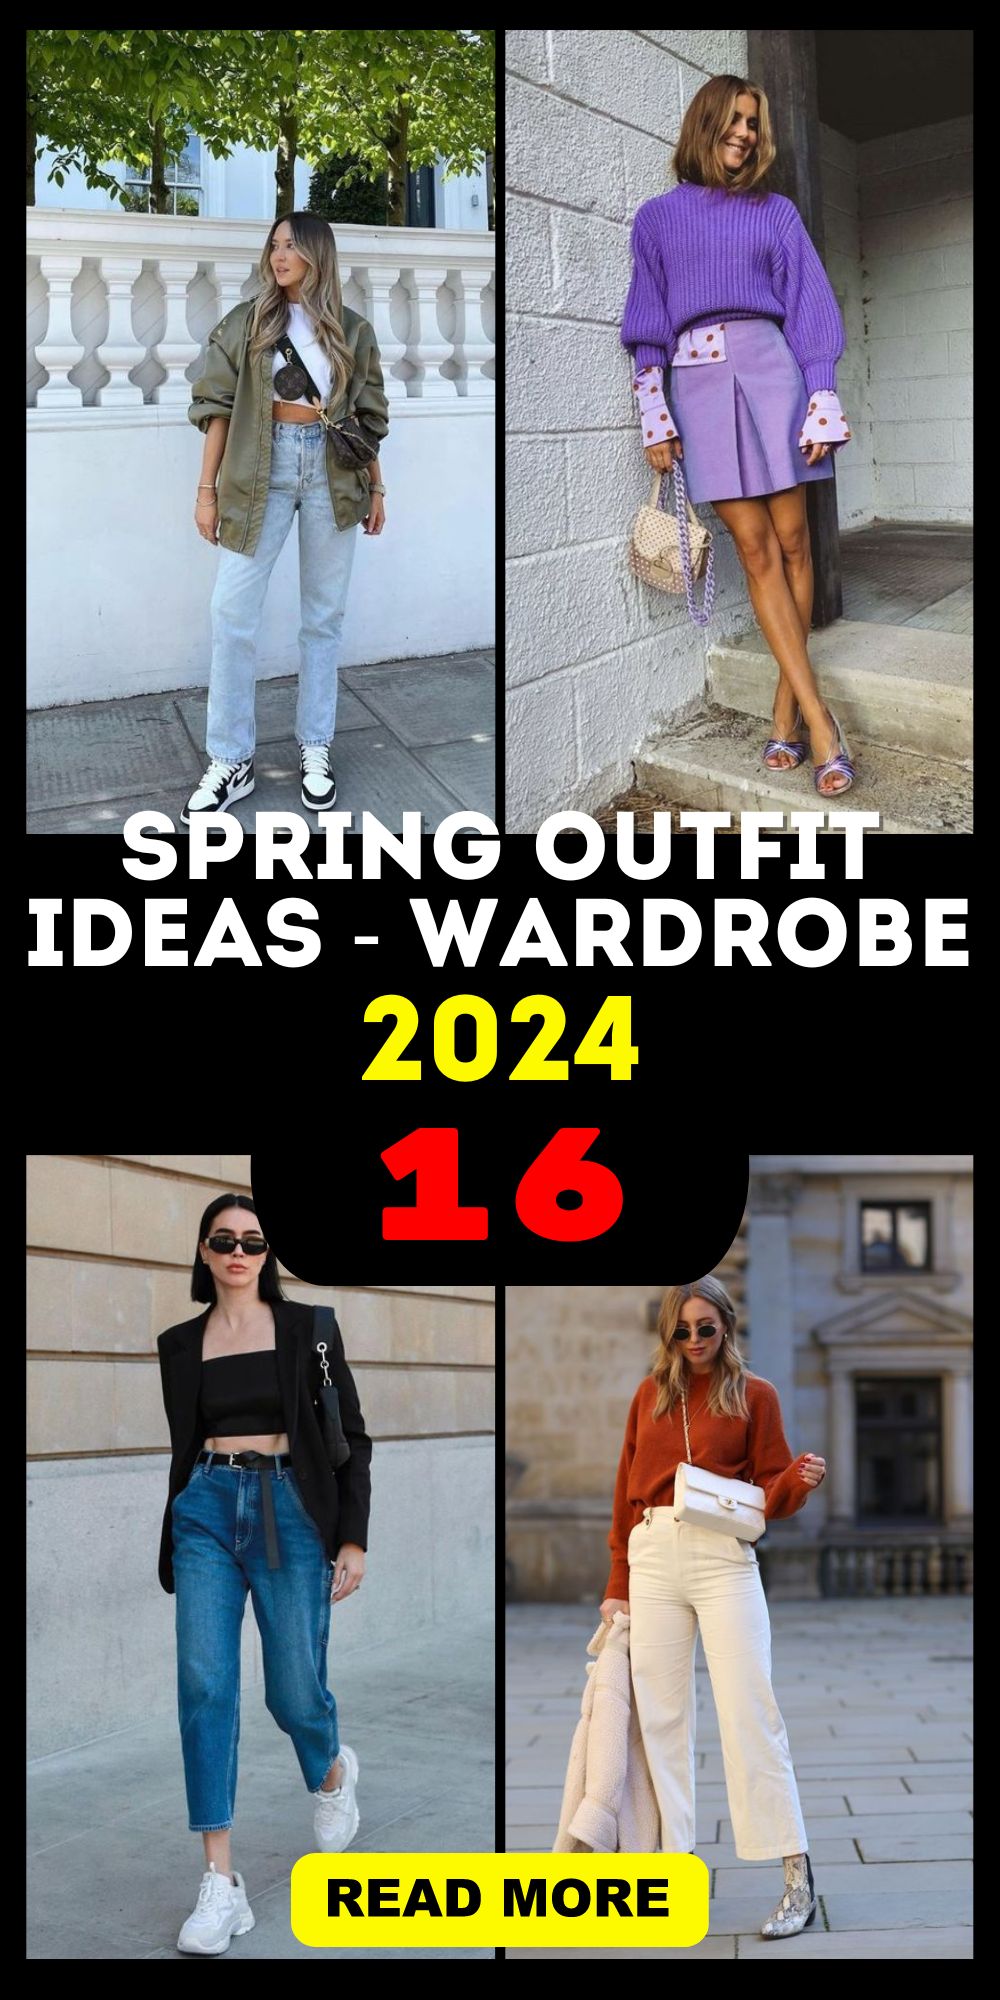 Top Spring Outfit Ideas 2024 - Trendy & Elegant Wardrobe Essentials